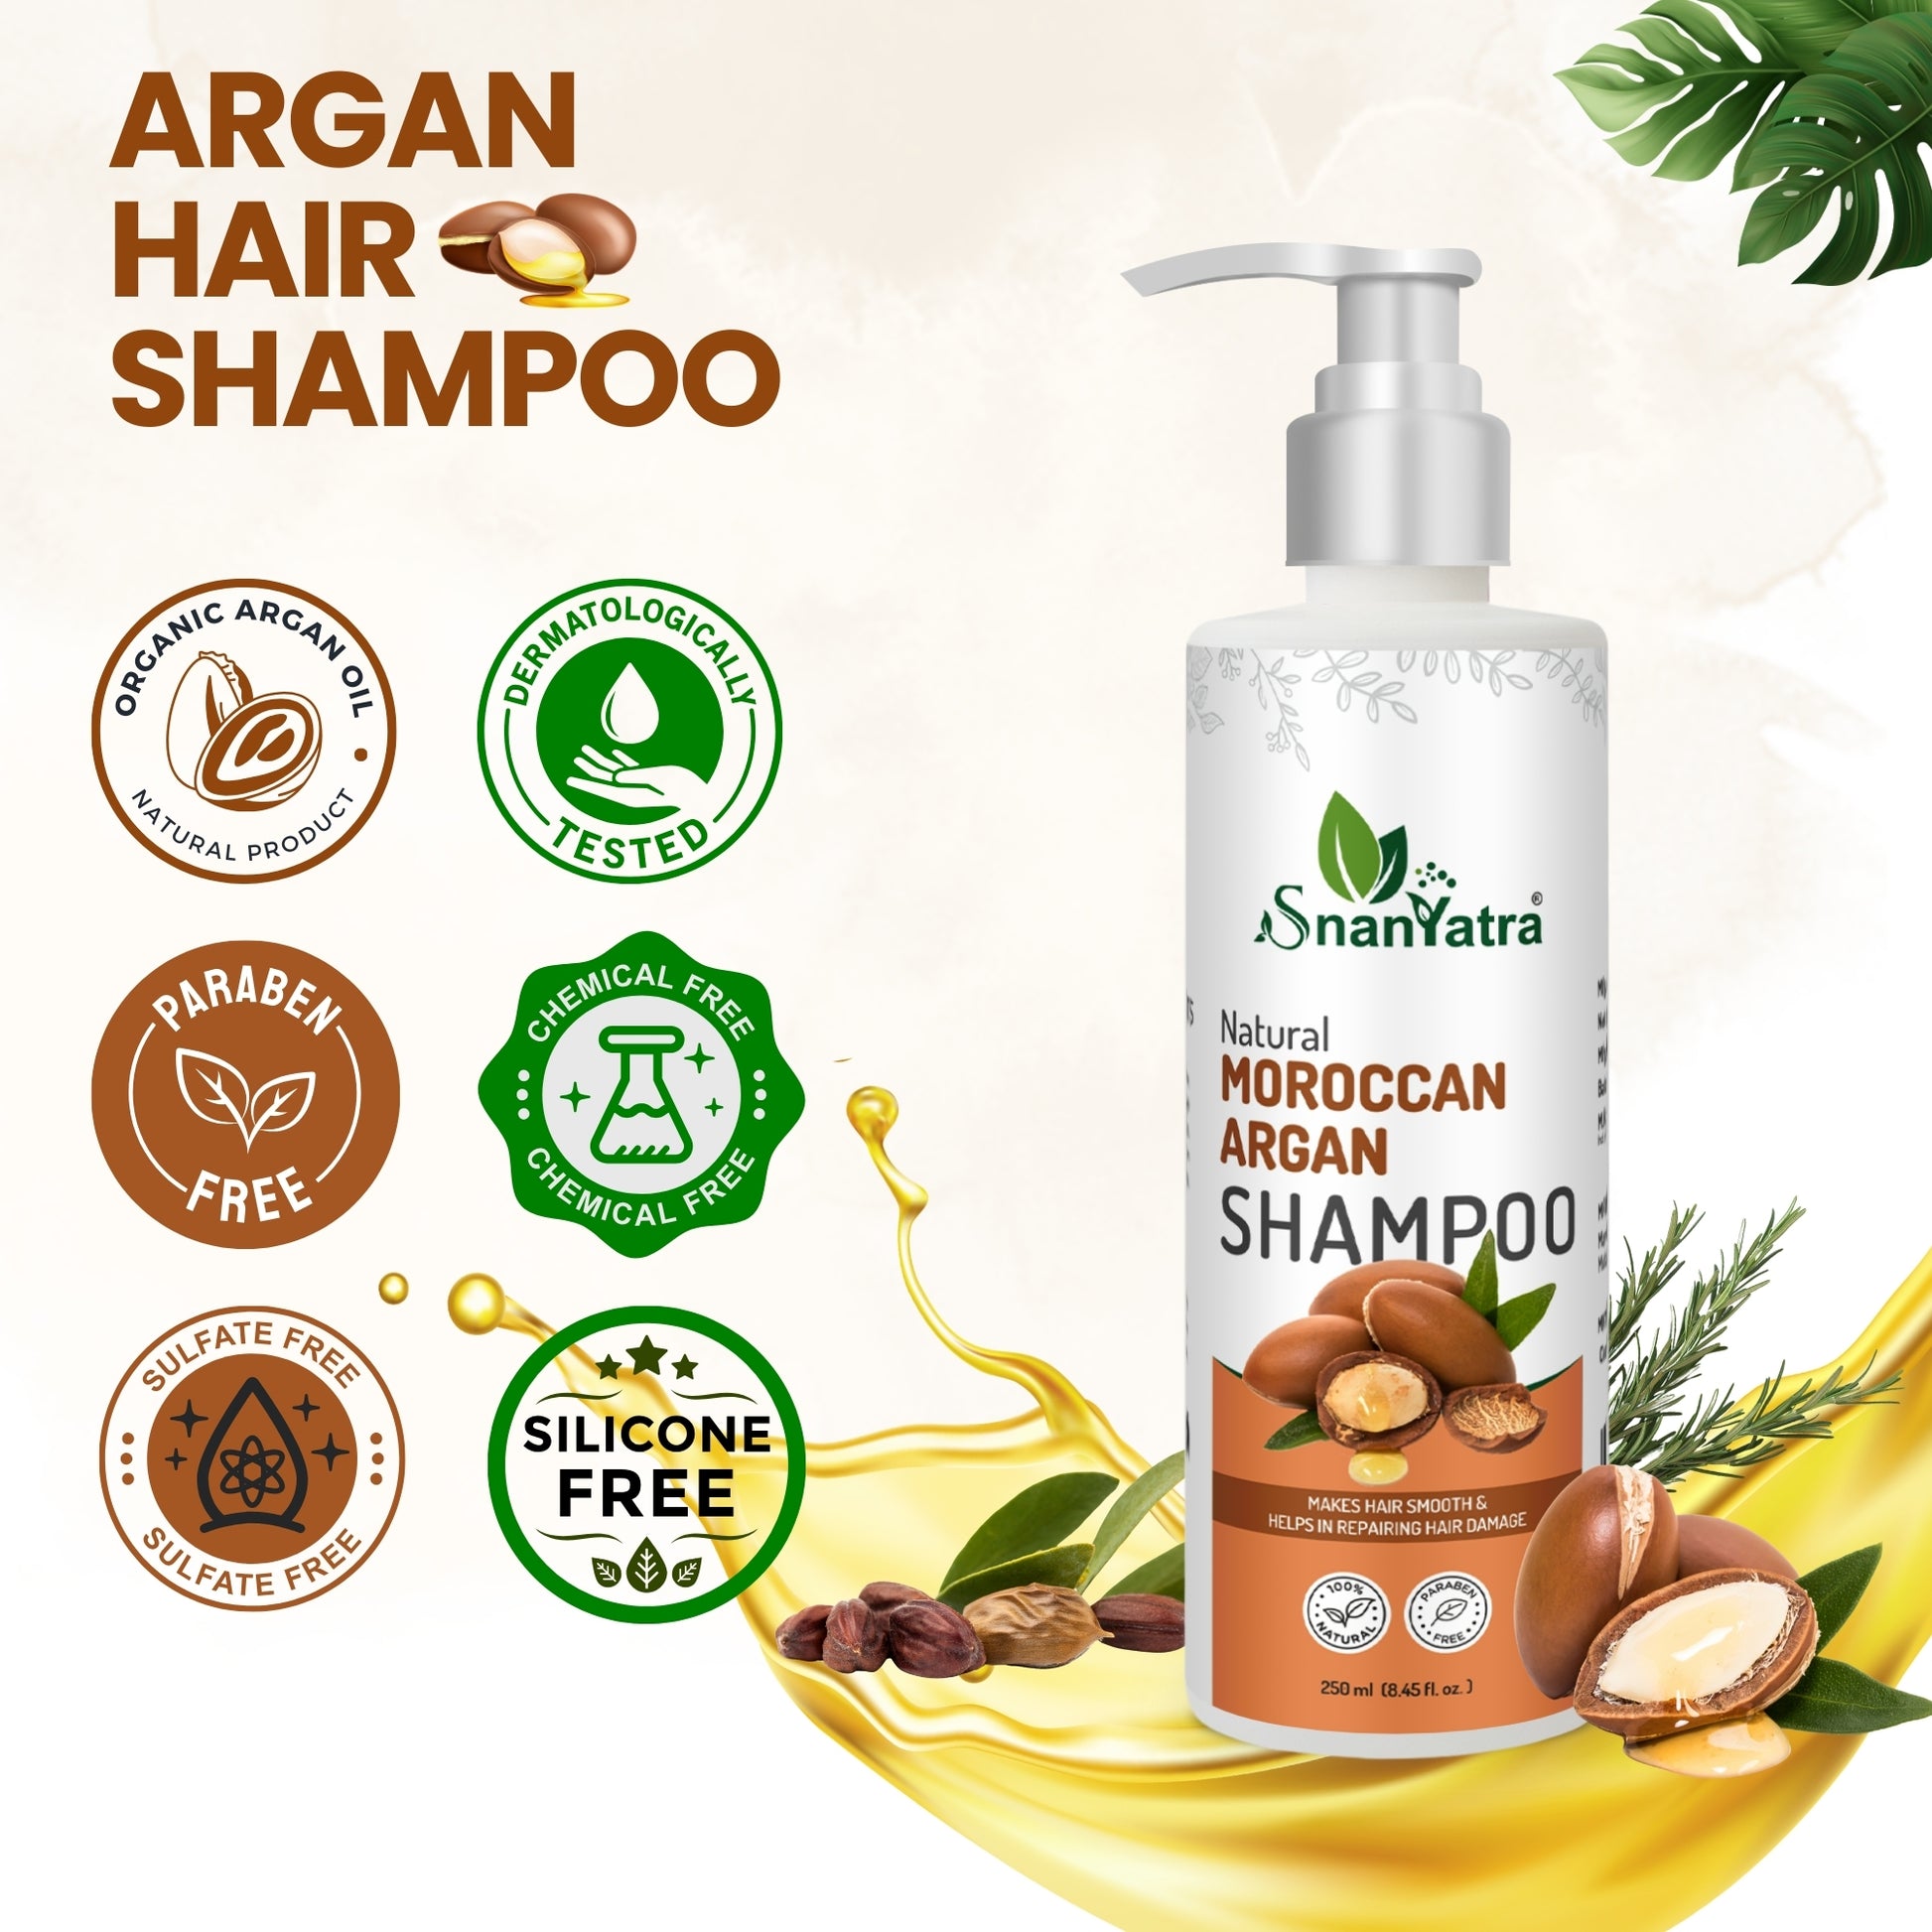 Features of Argan Shampoo